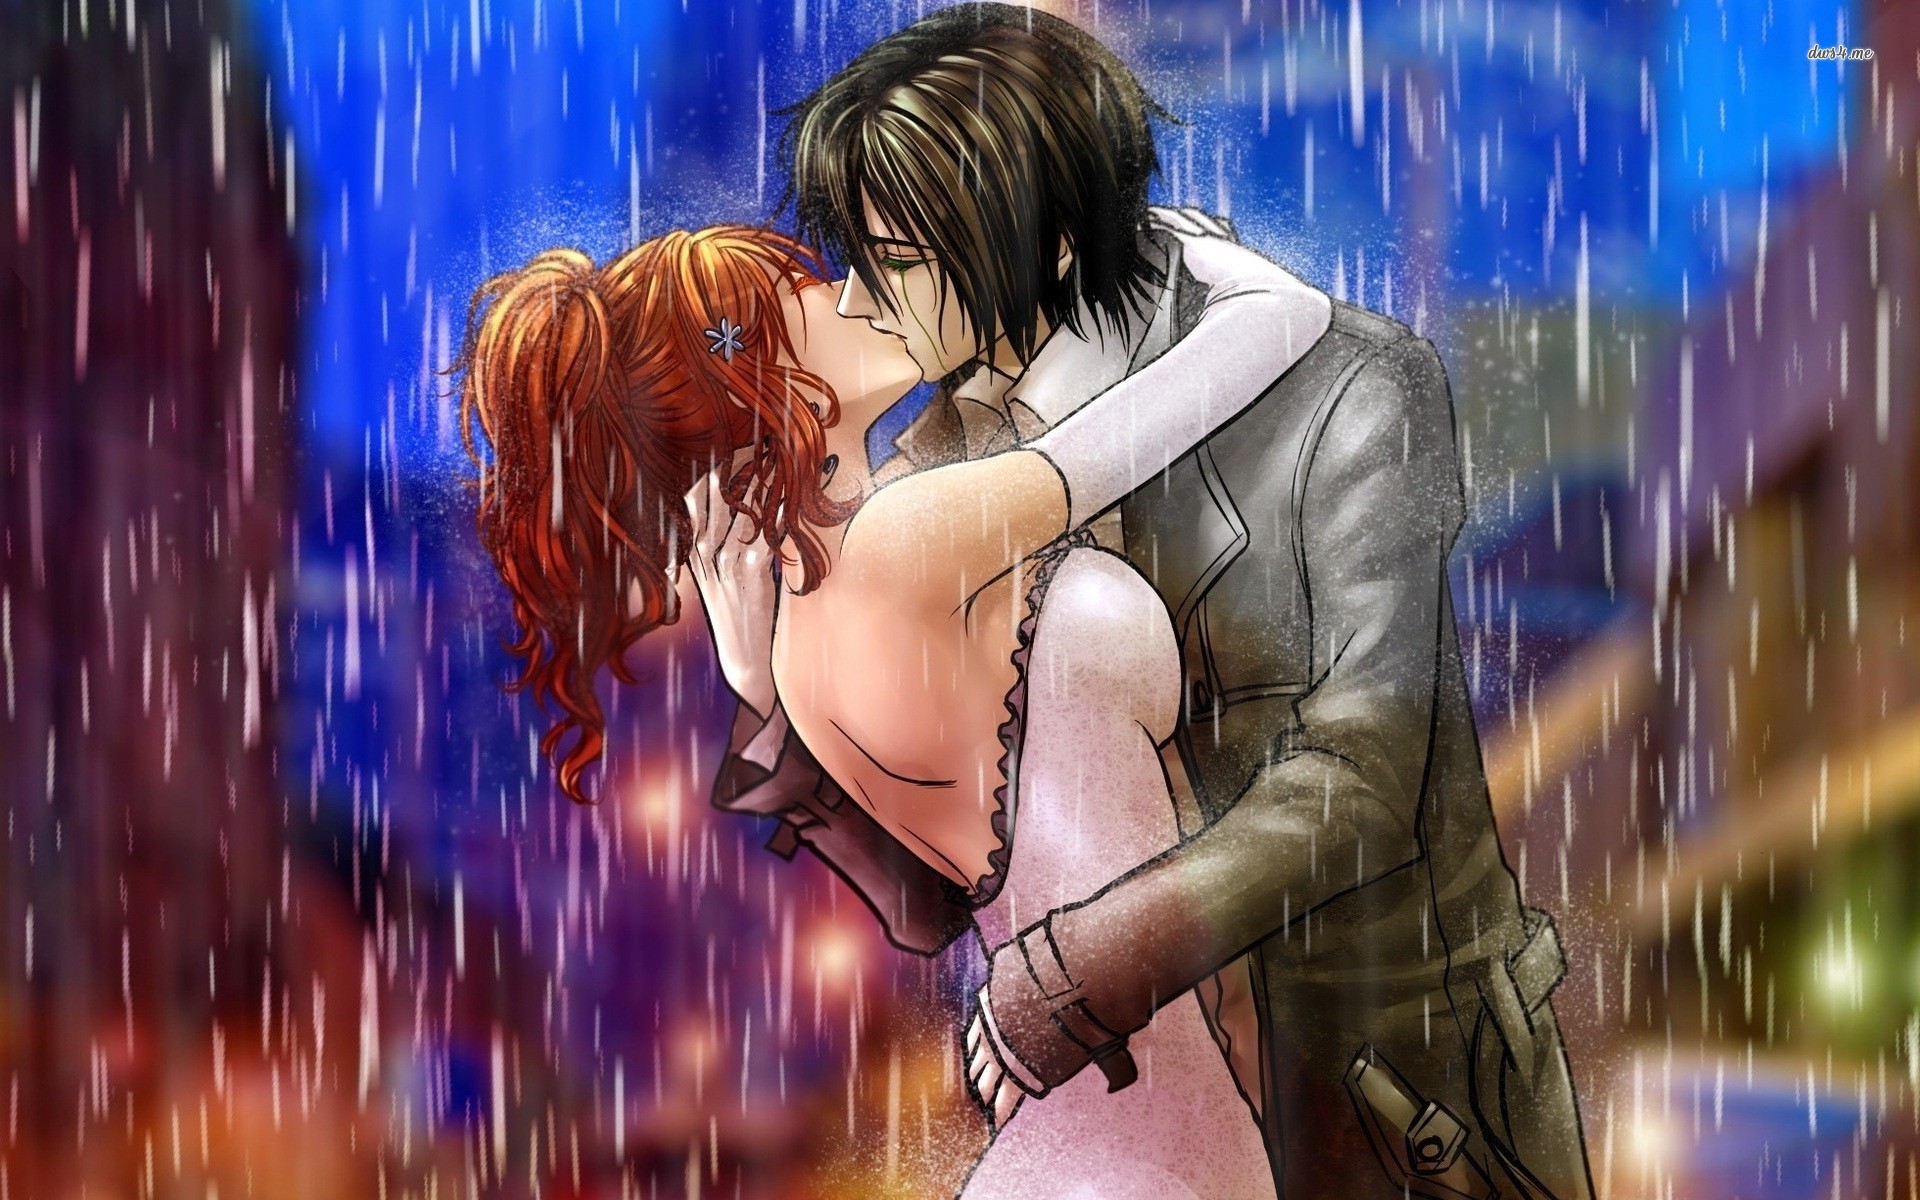 Romantic Anime Couple Kiss - 1920x1200 Wallpaper 